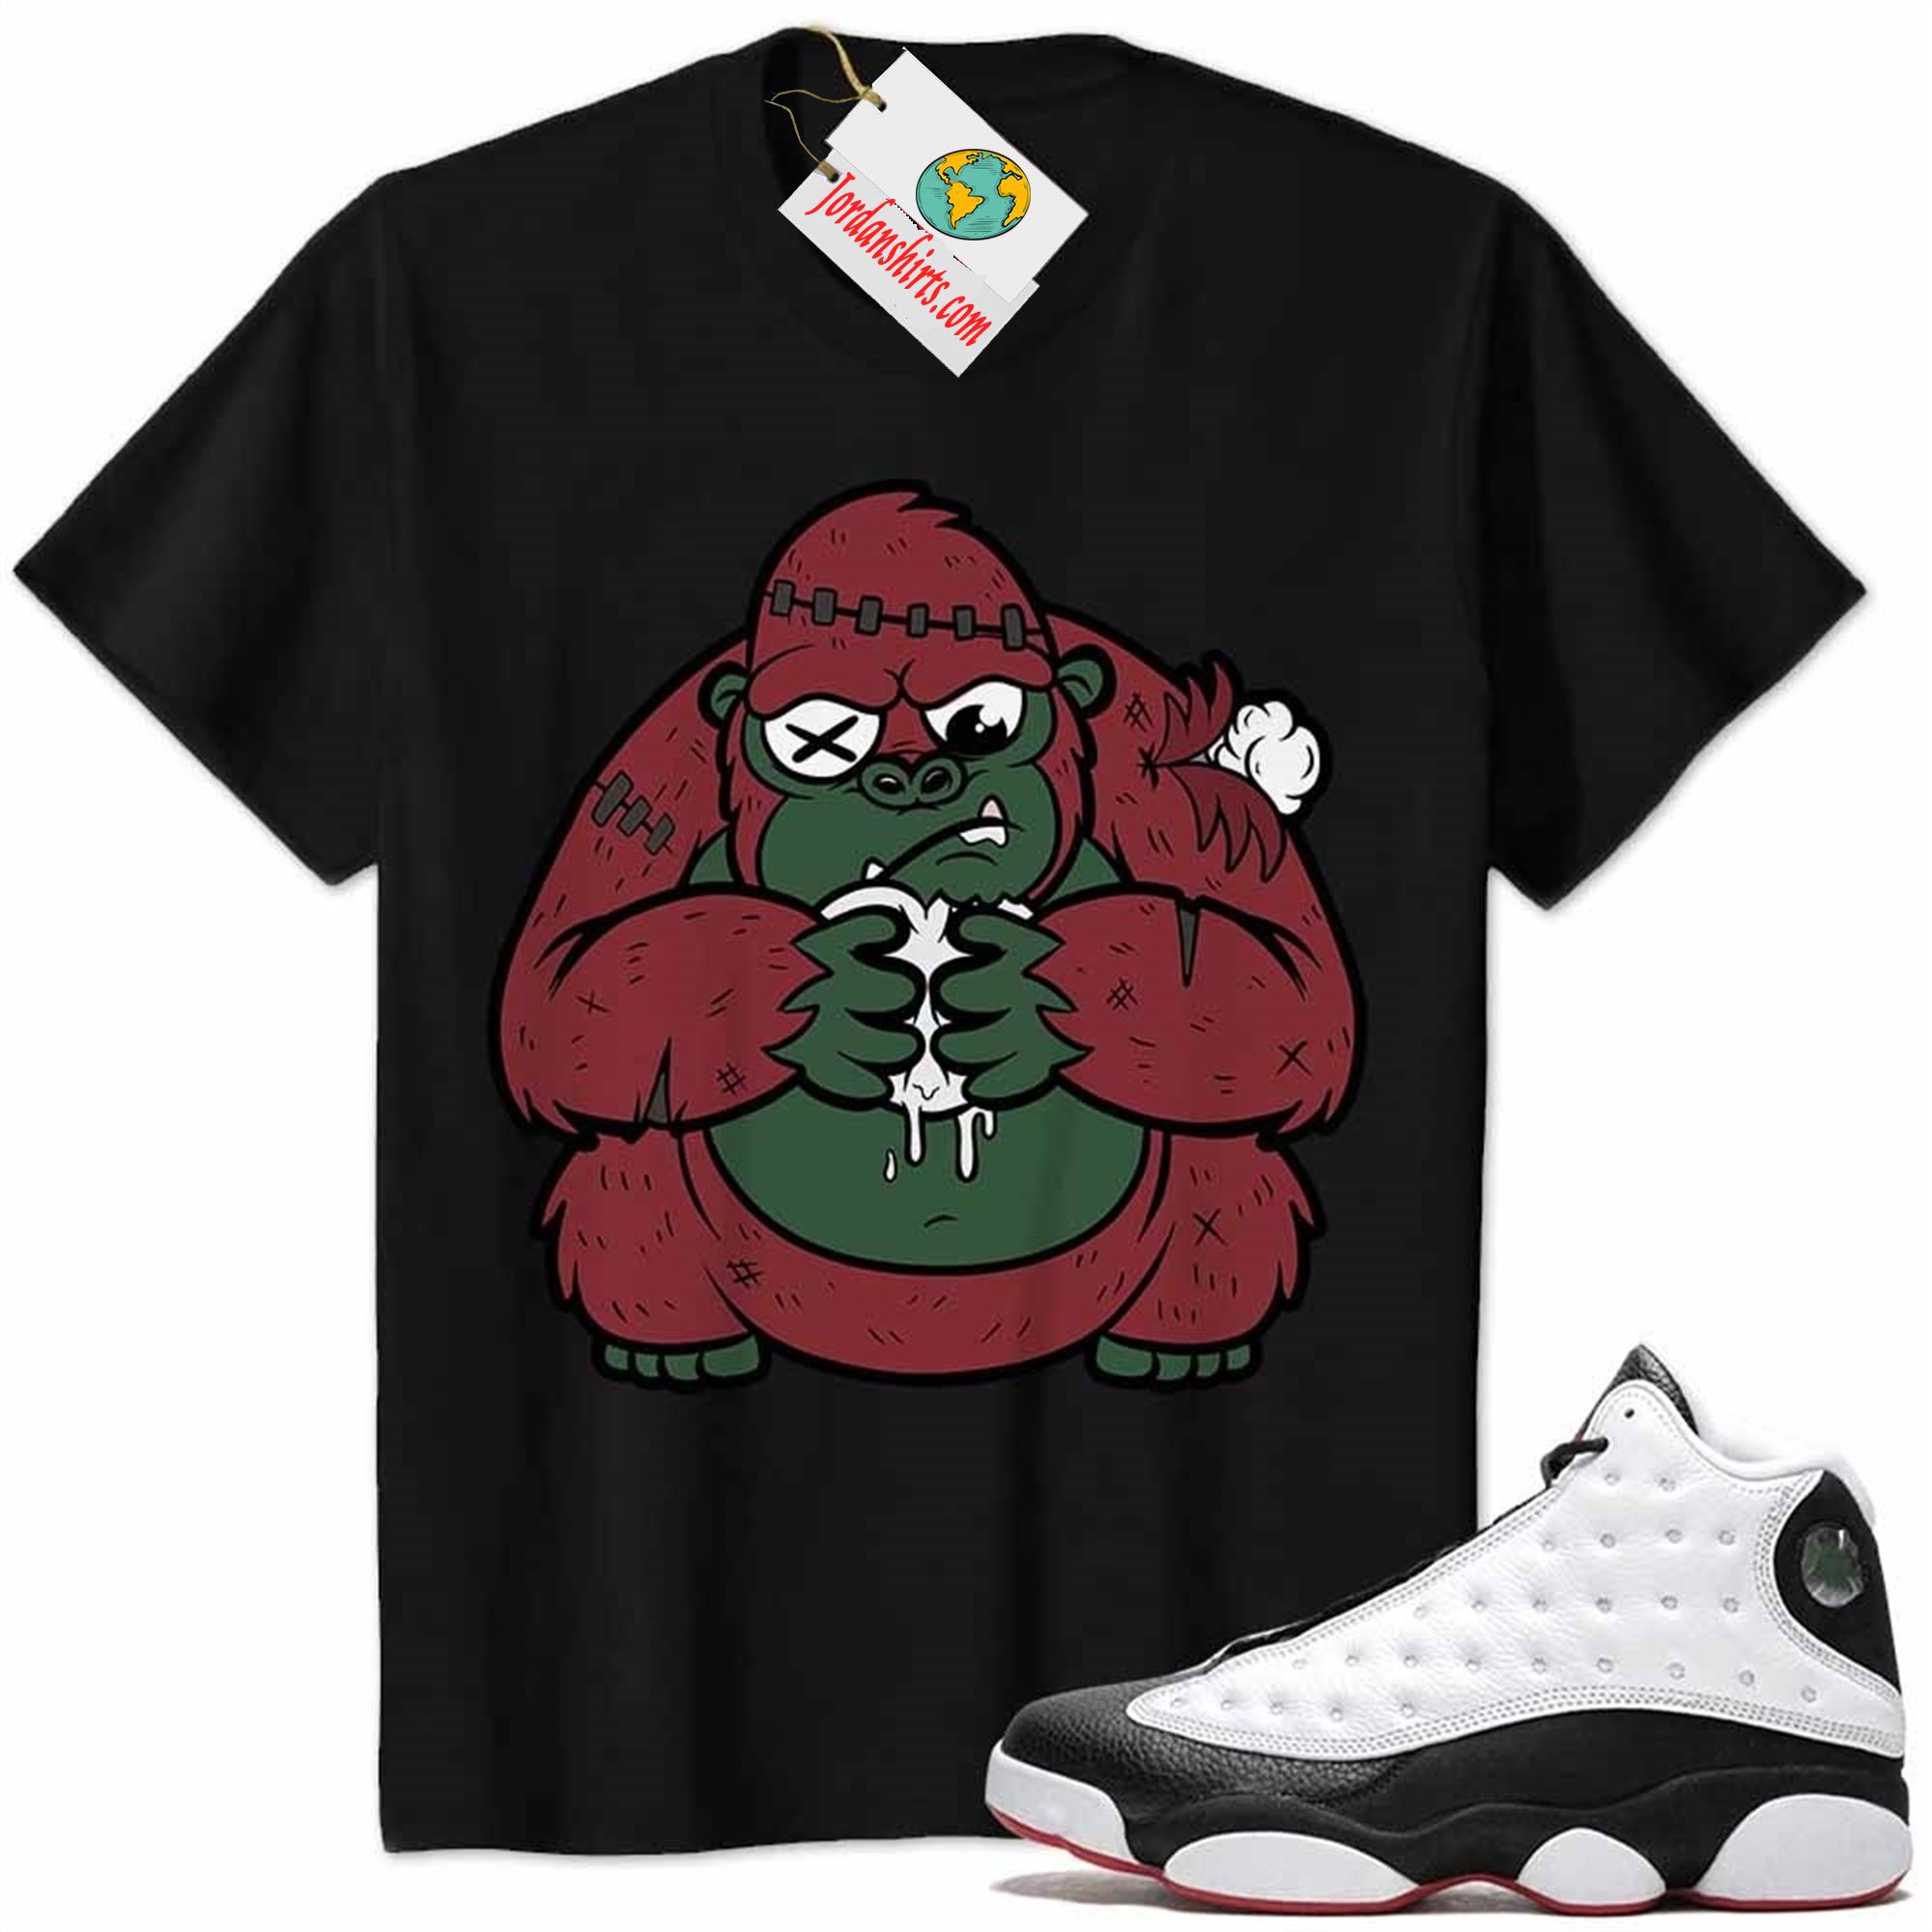 Jordan 13 Shirt, Cute Monkey Broken Heart Black Air Jordan 13 He Got Game 13s Full Size Up To 5xl